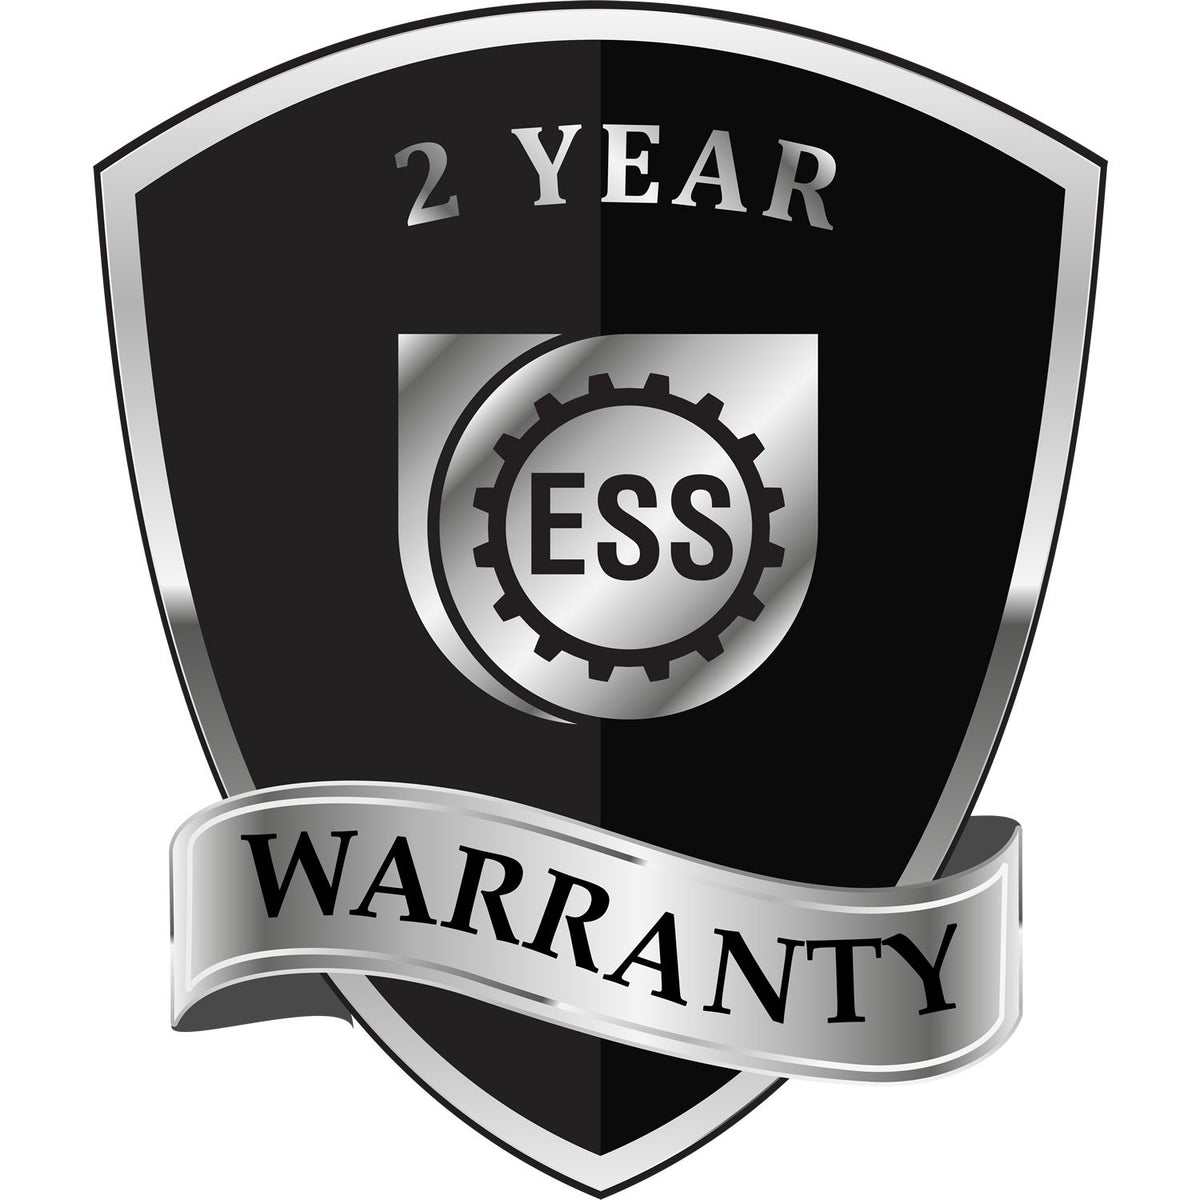 A black and silver badge or emblem showing warranty information for the Gift Arkansas Land Surveyor Seal